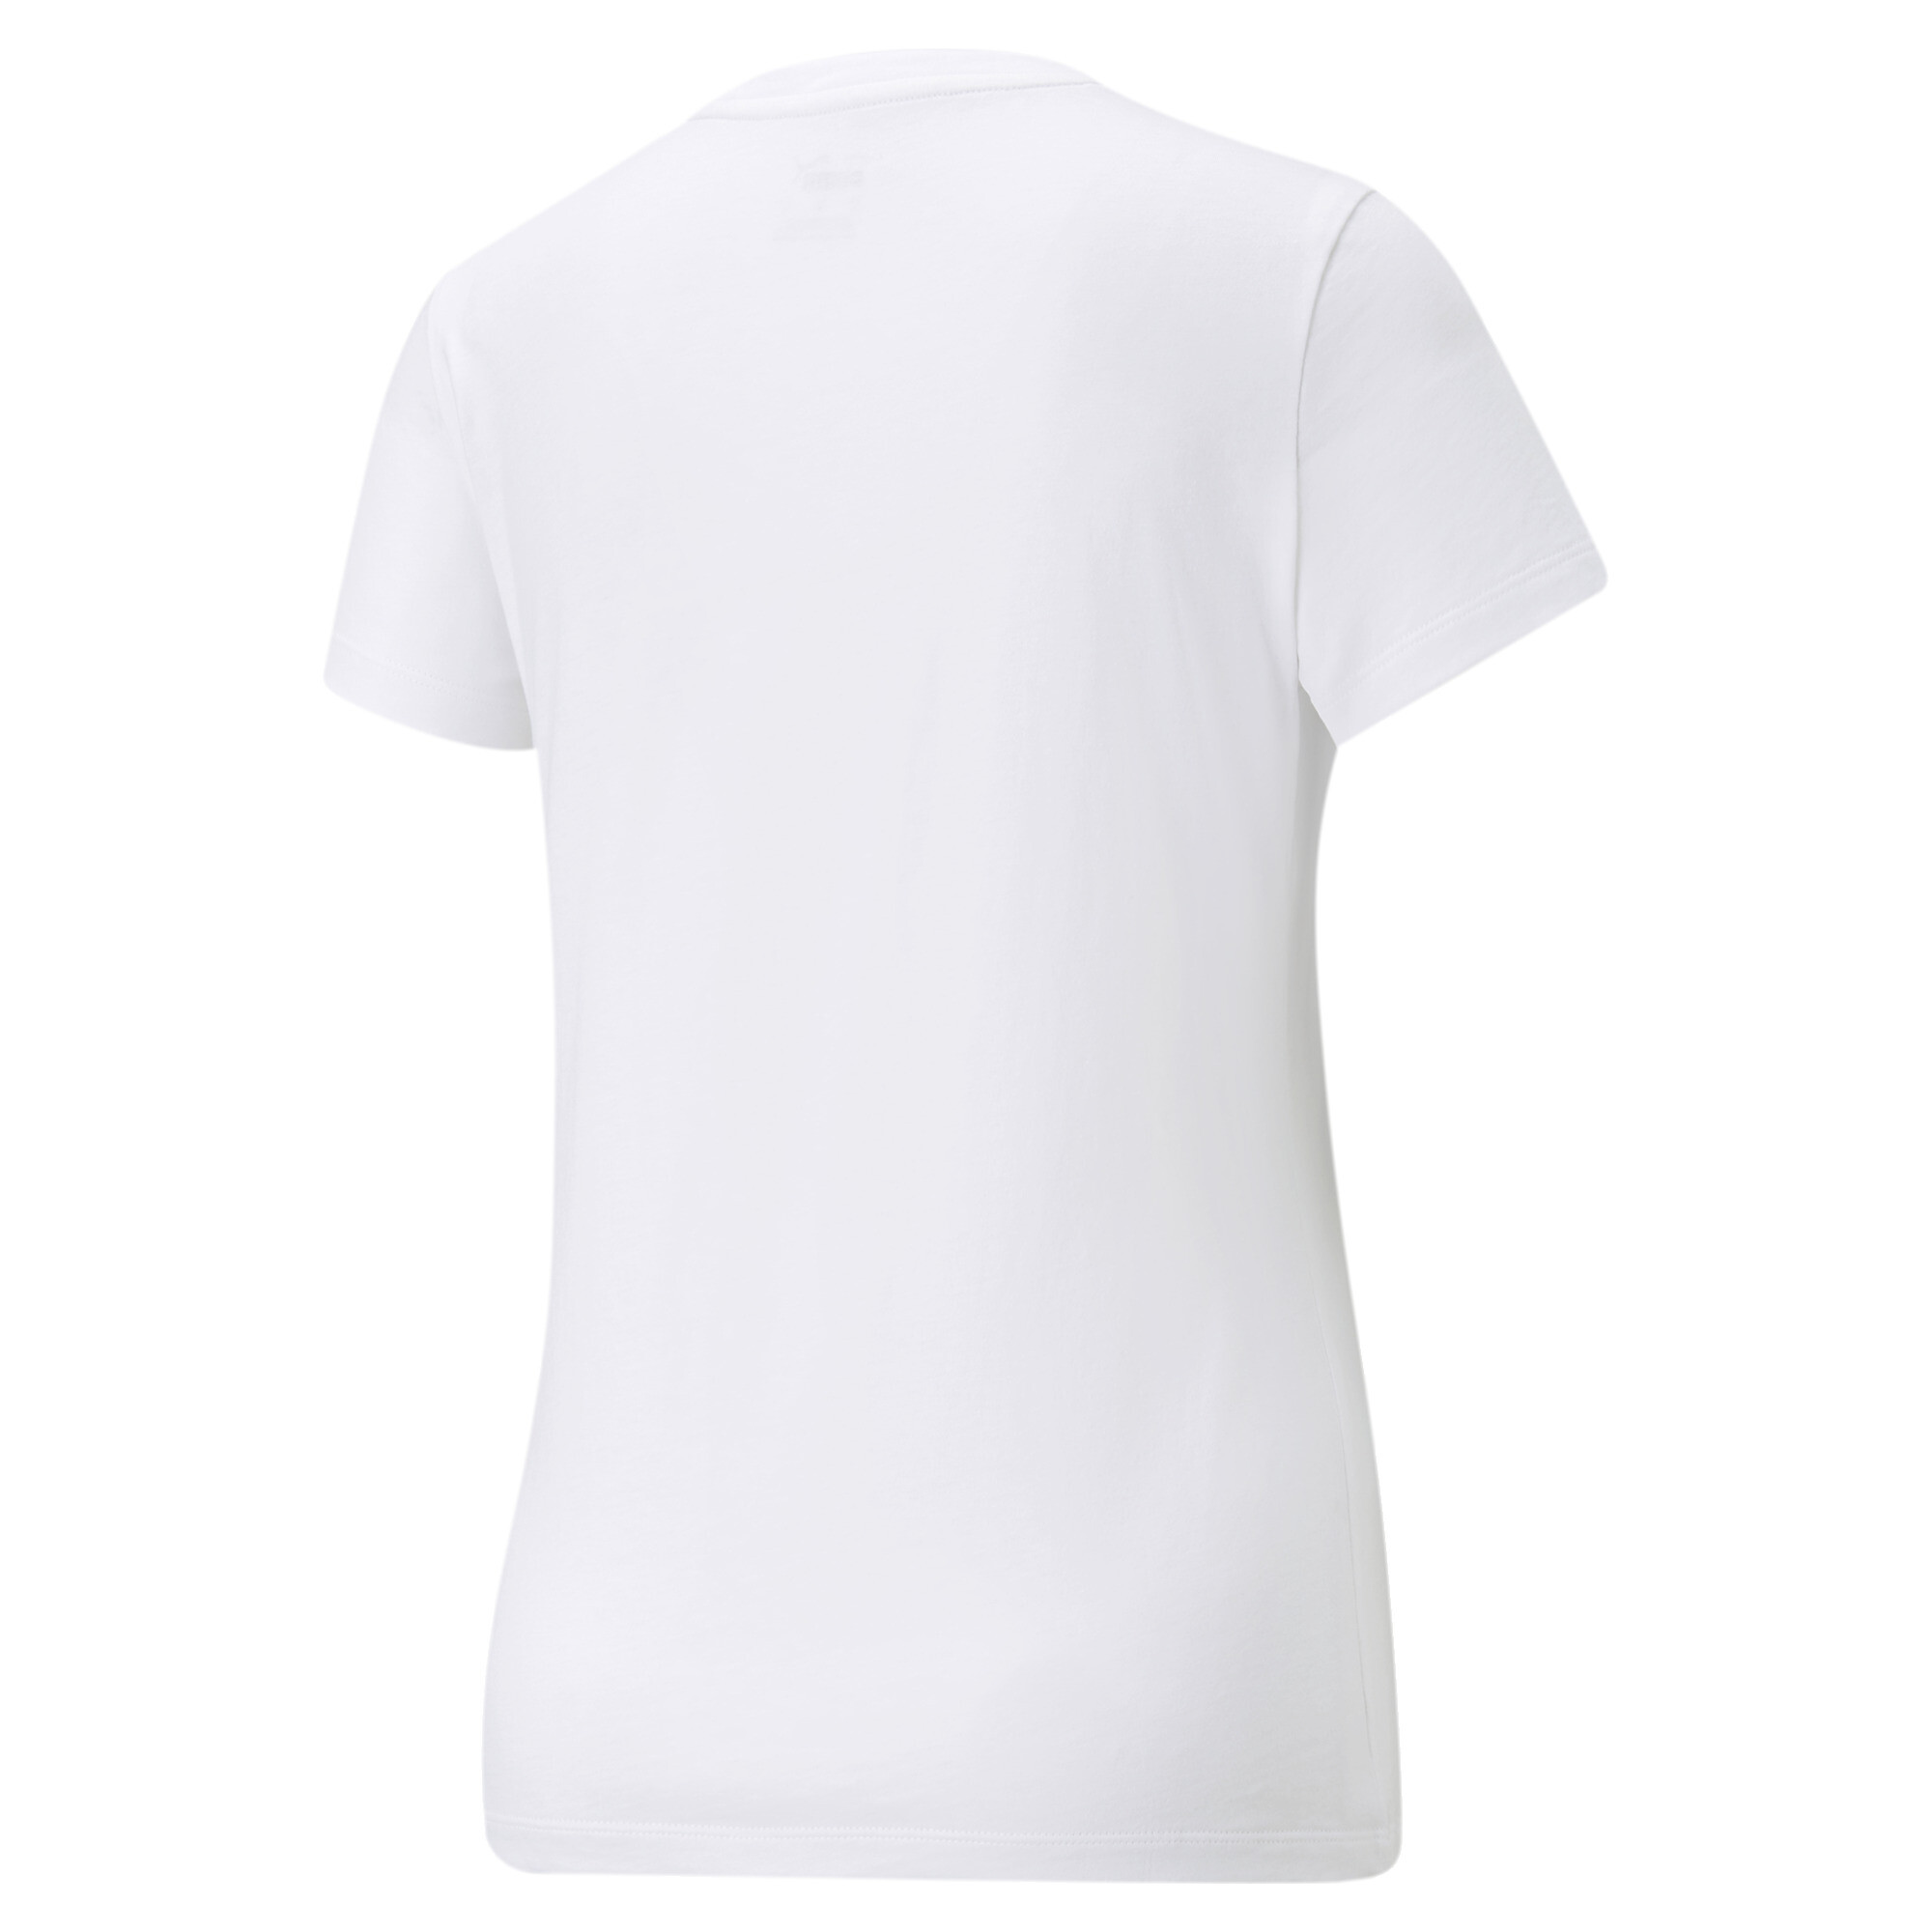 Women's PUMA Essentials+ Metallic Logo T-Shirt In White/Silver, Size Medium